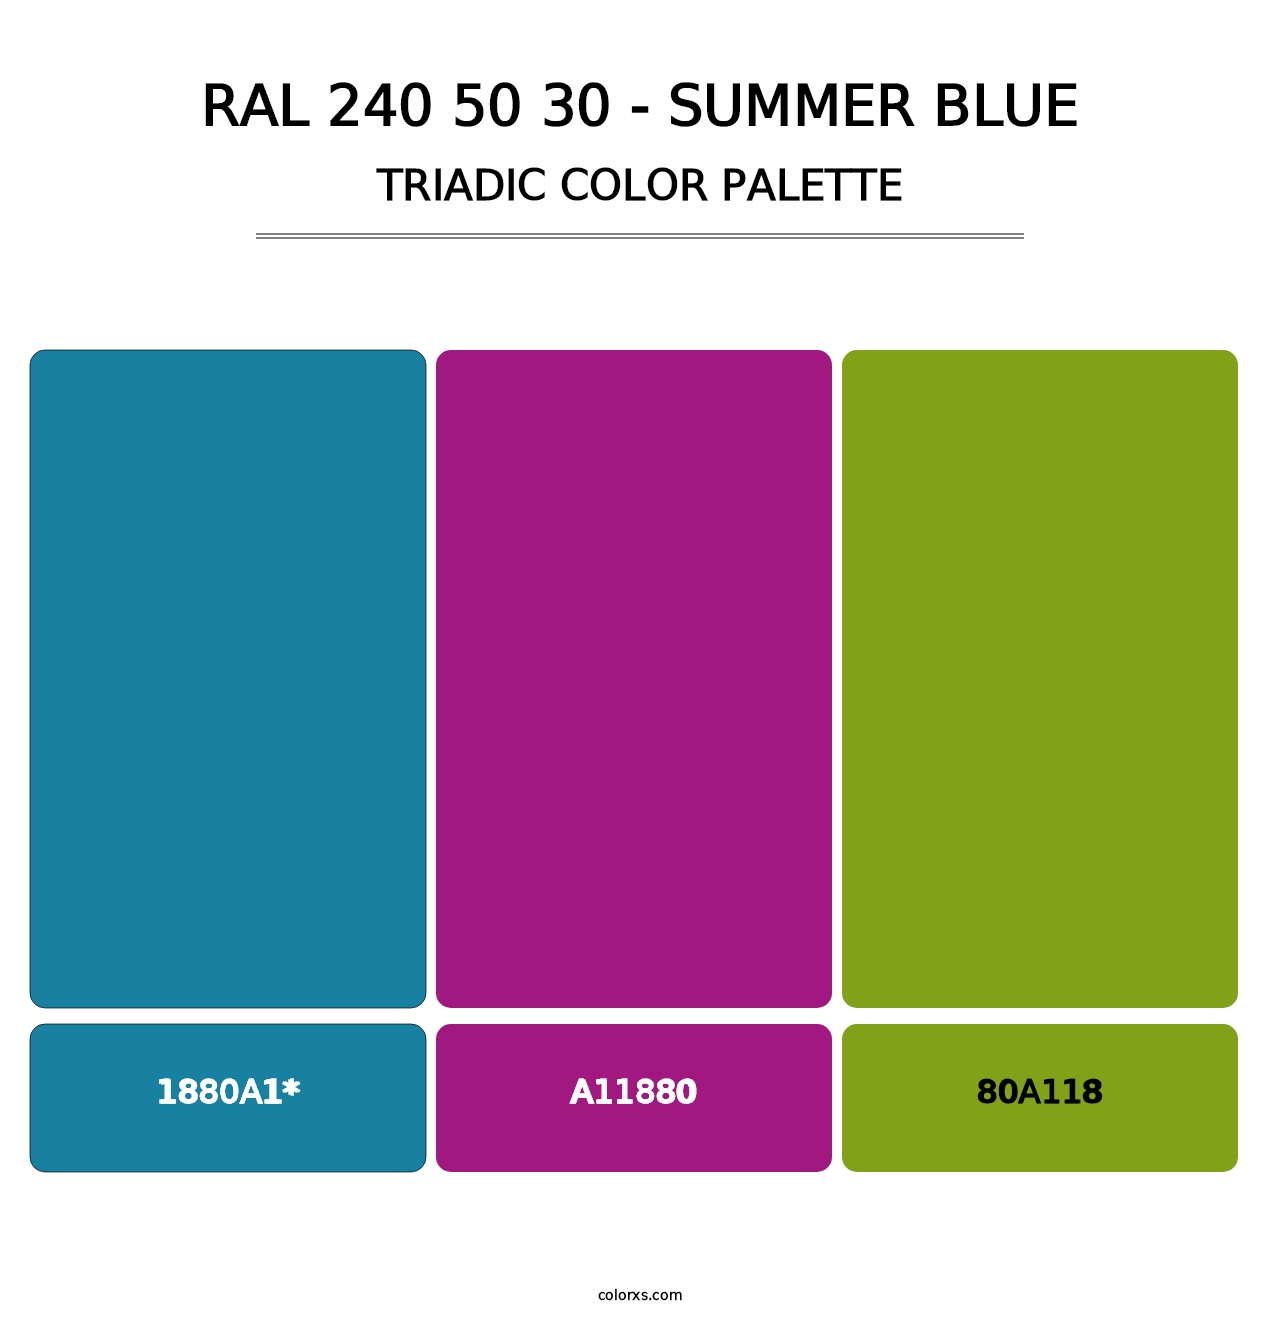 RAL 240 50 30 - Summer Blue - Triadic Color Palette